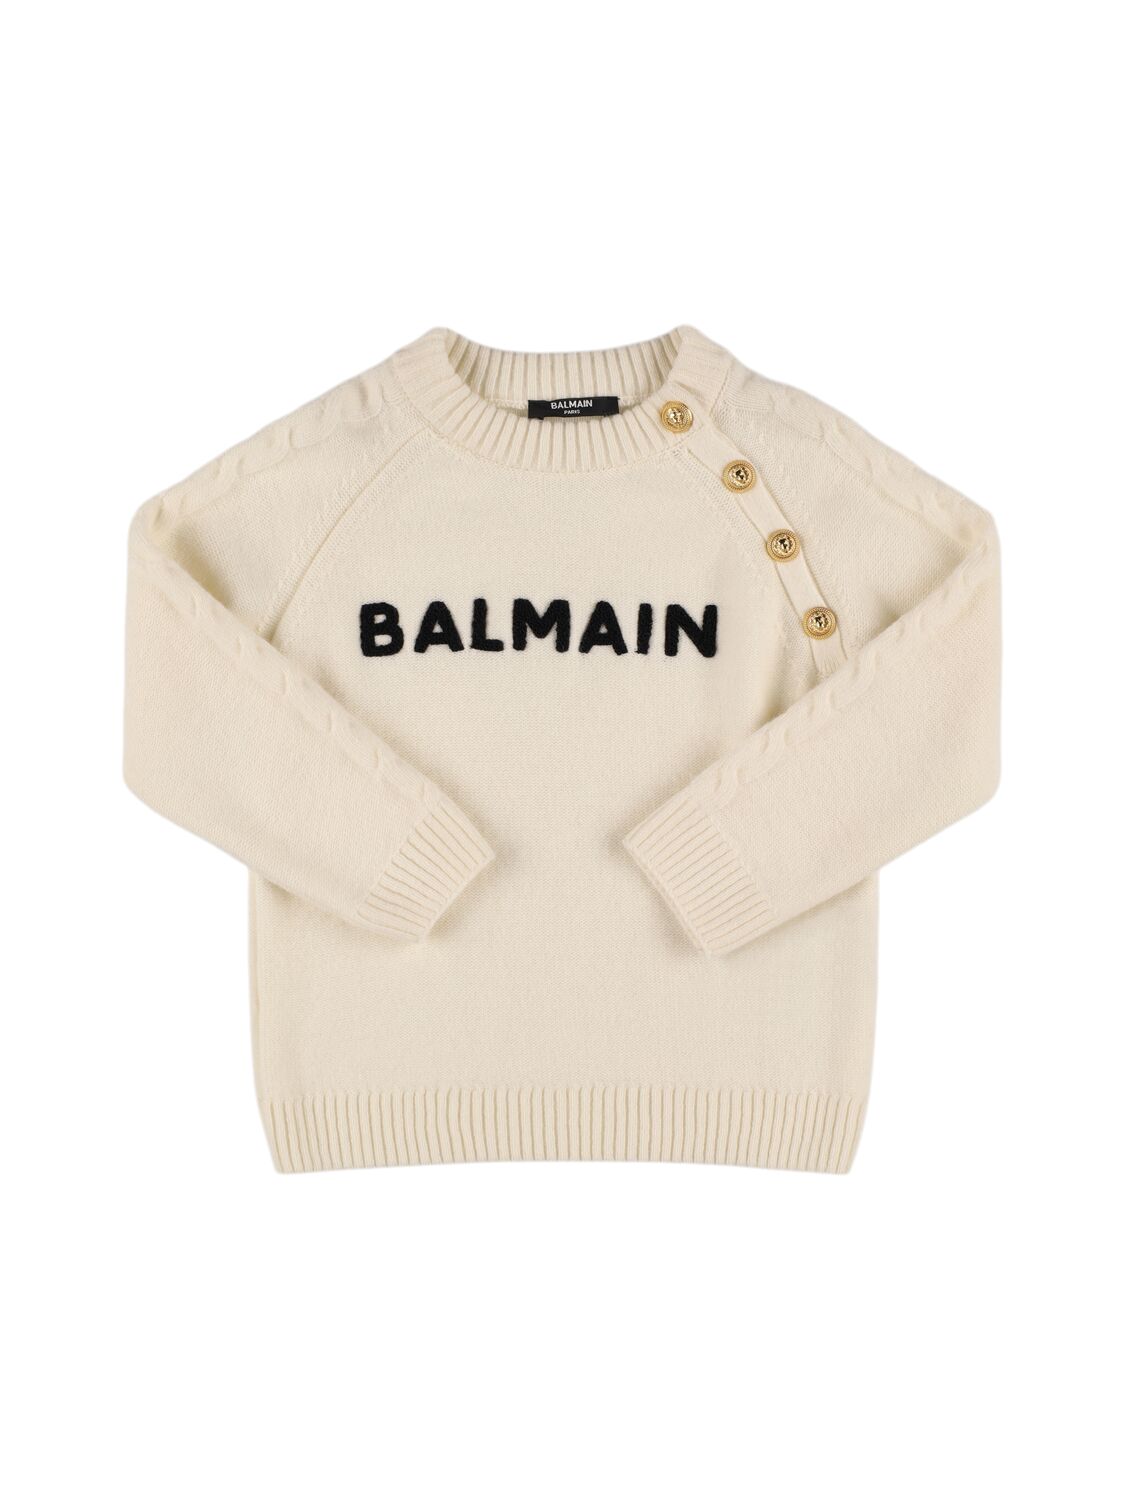 Balmain Wool Blend Knit Sweater W/ Buttons In White/black